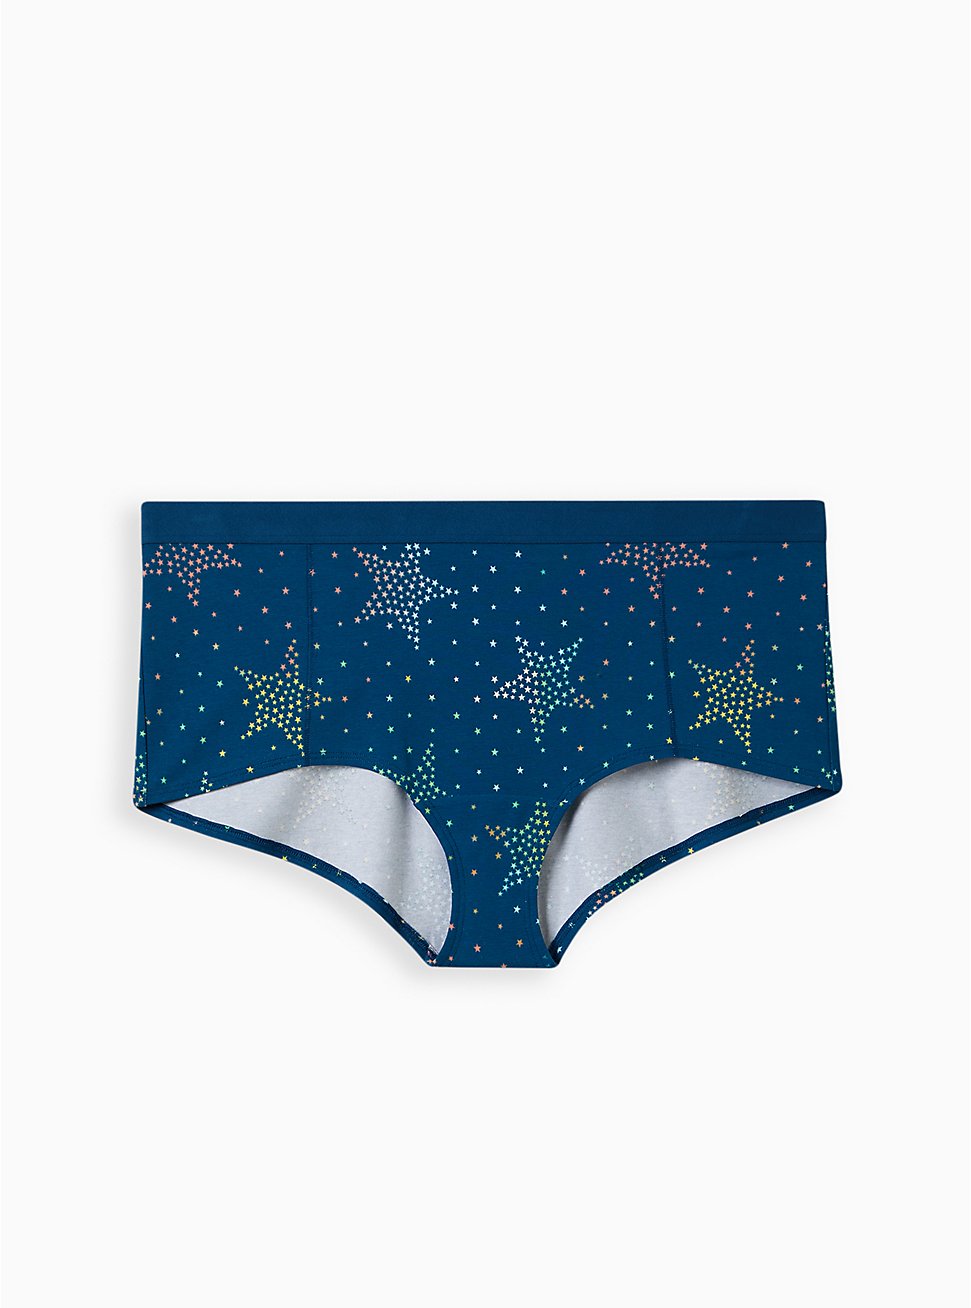 Plus Size Boyshort Panty - Cotton Stars Blue, GLOW STAR CLUSTERS, hi-res